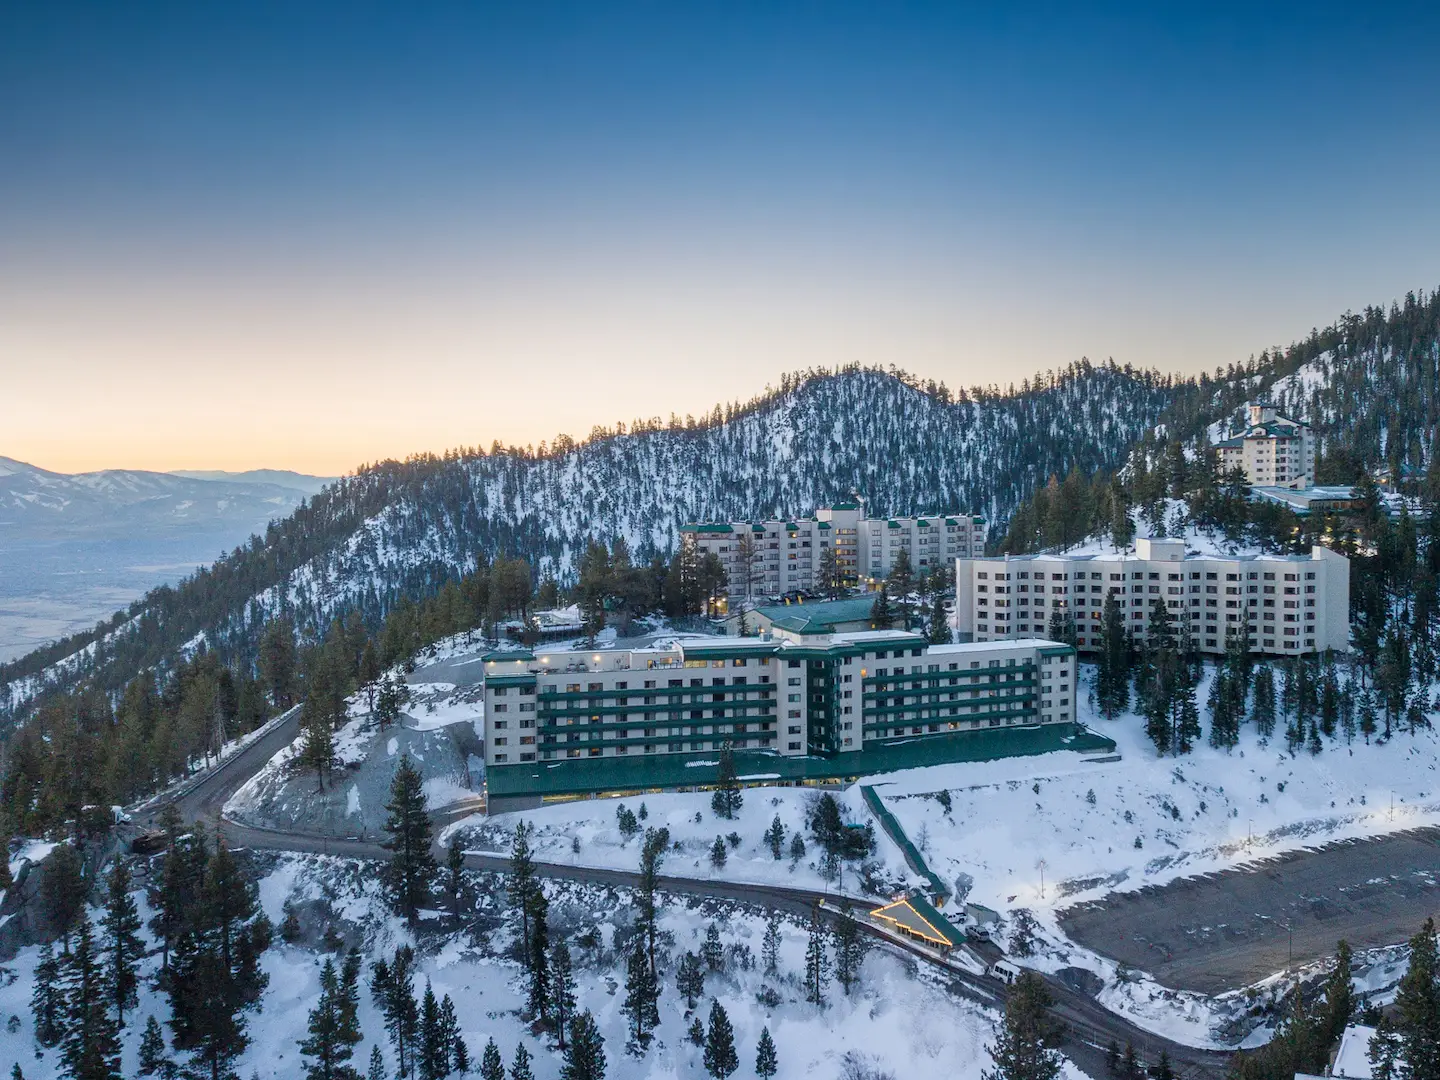 Tahoe Ridge Resort: Managed by Holiday Inn Club Vacations - Visit Lake Tahoe